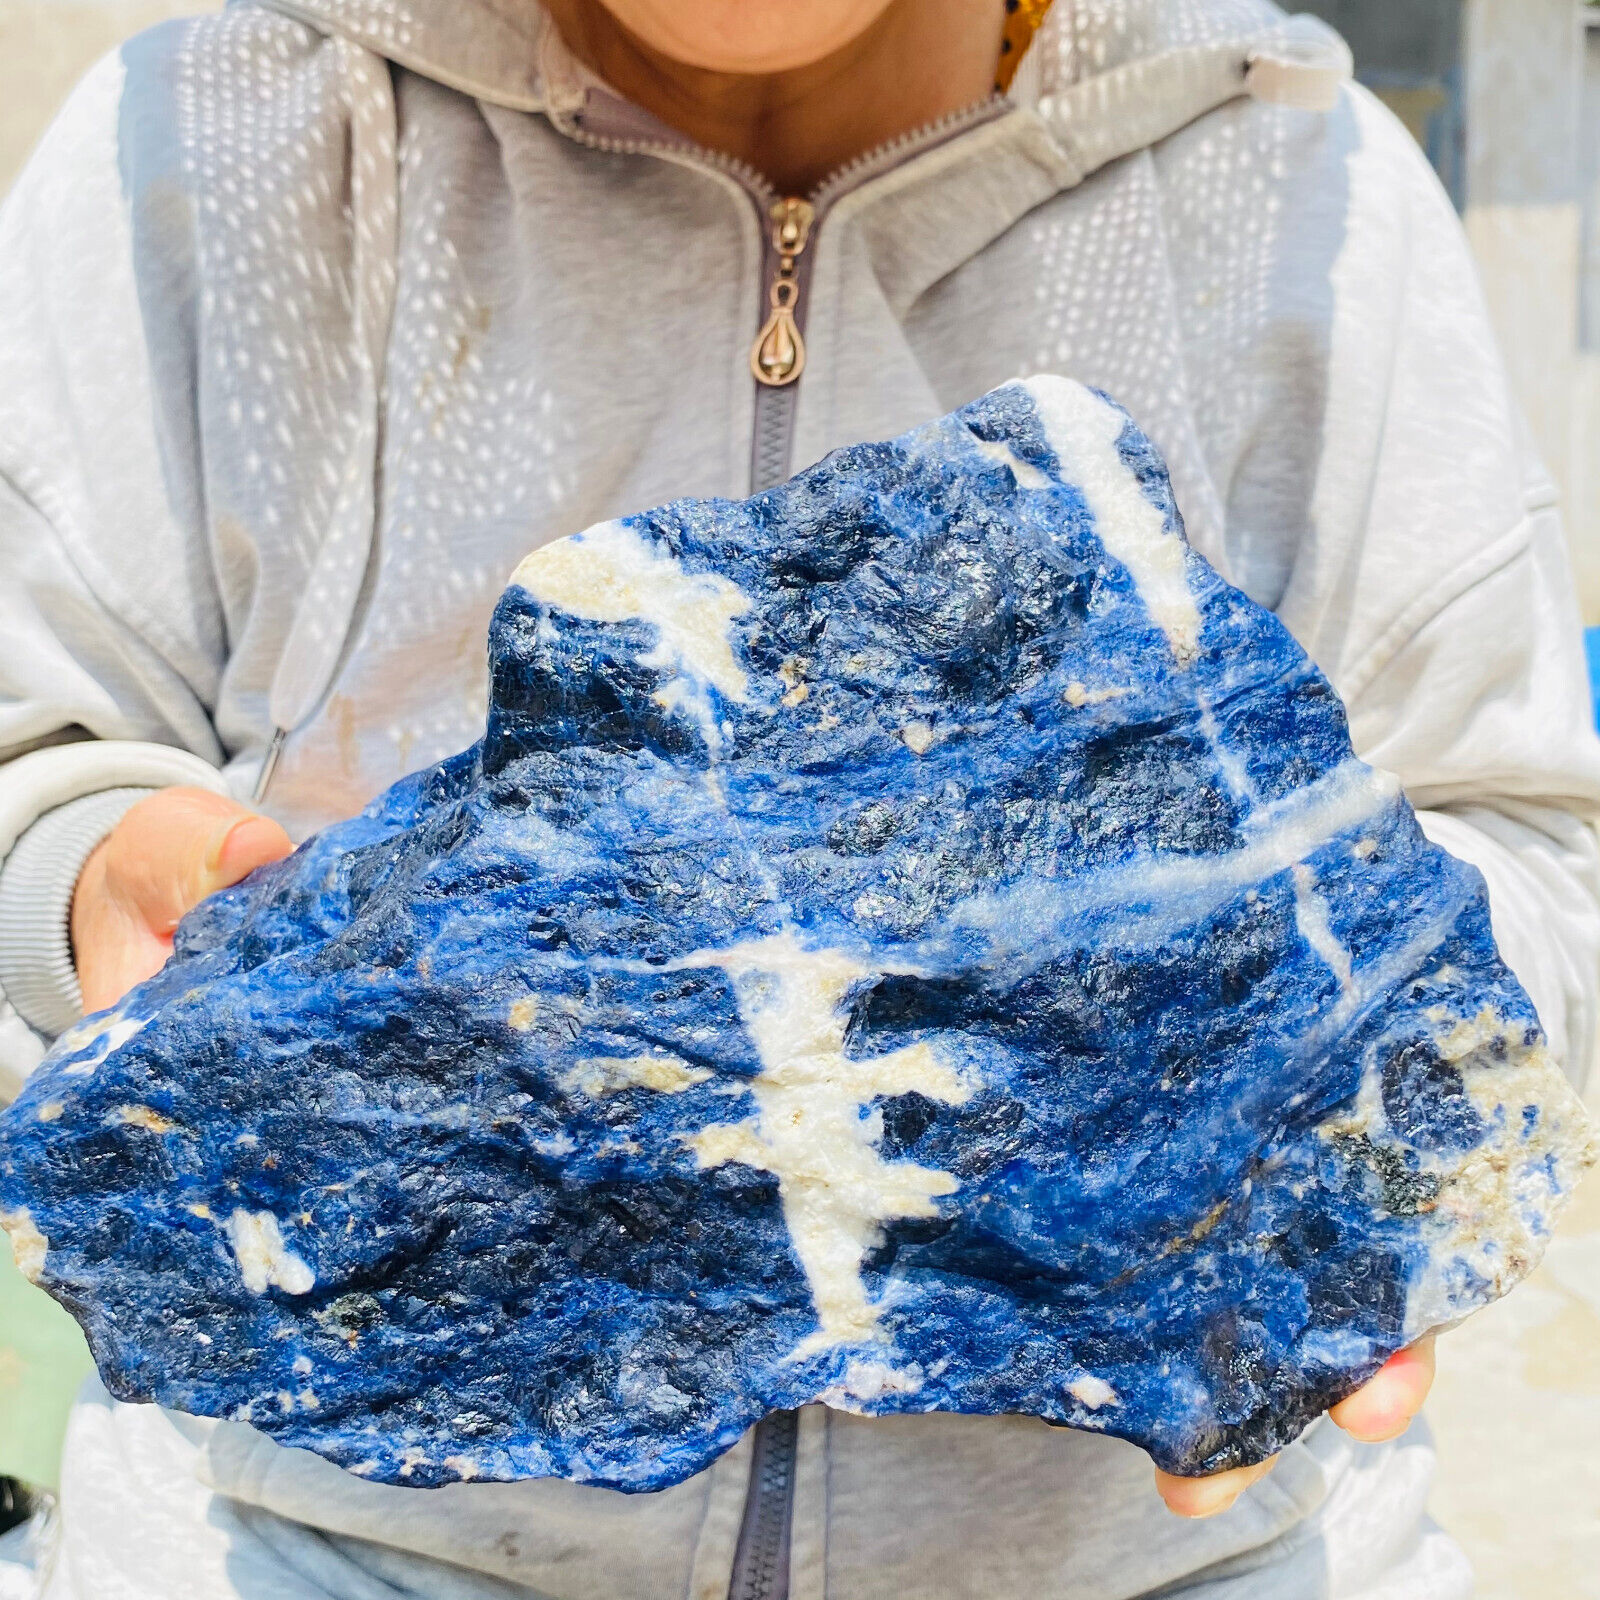 4.1kg A+++ Blue Sodalite Rock Crystal Unprocessed Geology Collection Specimen